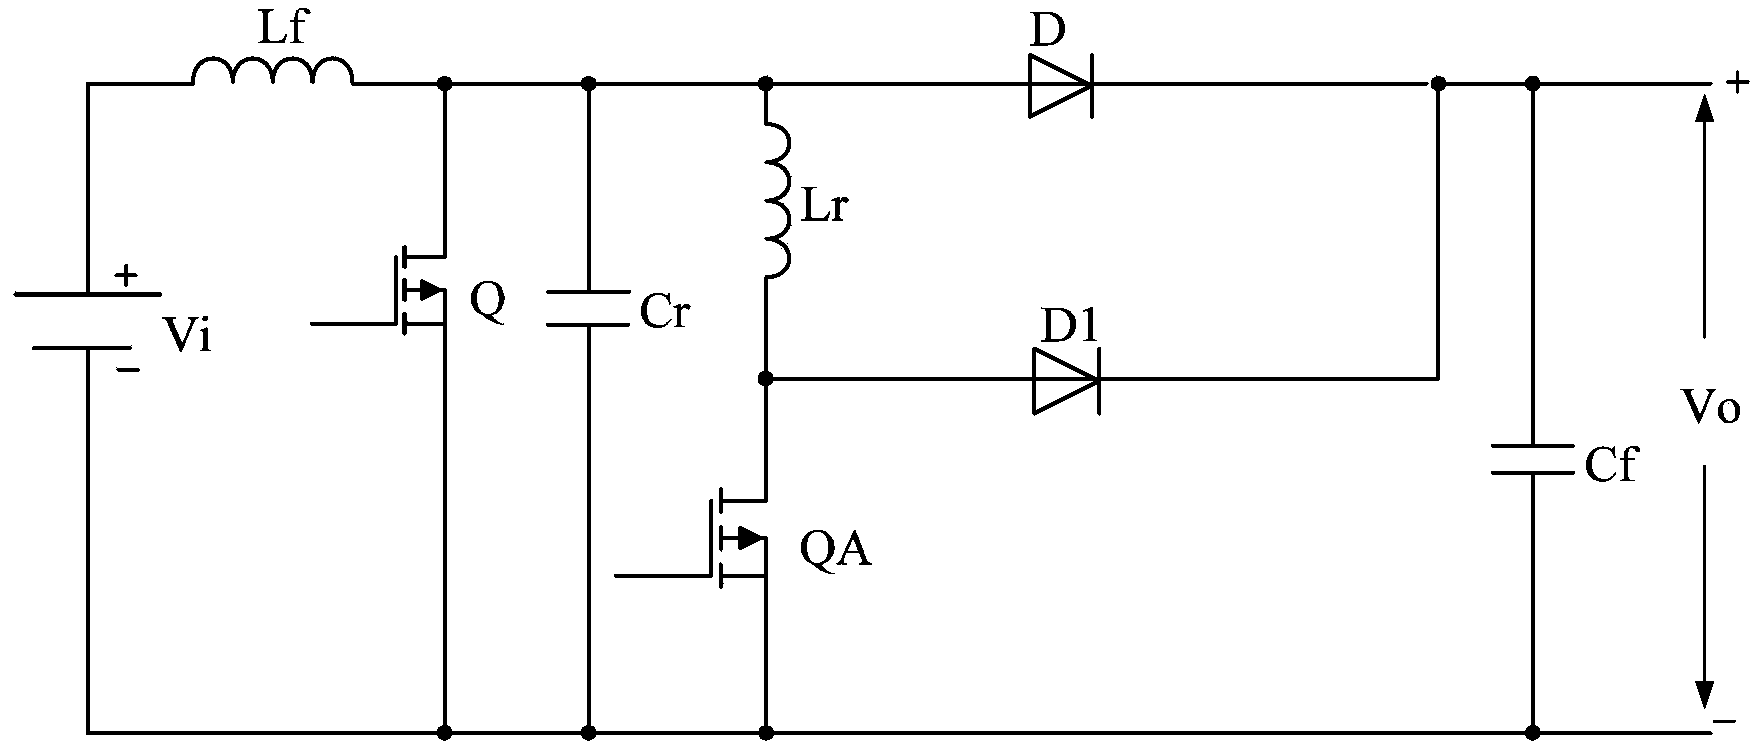 Zero-voltage switching pulse-width modulation converter